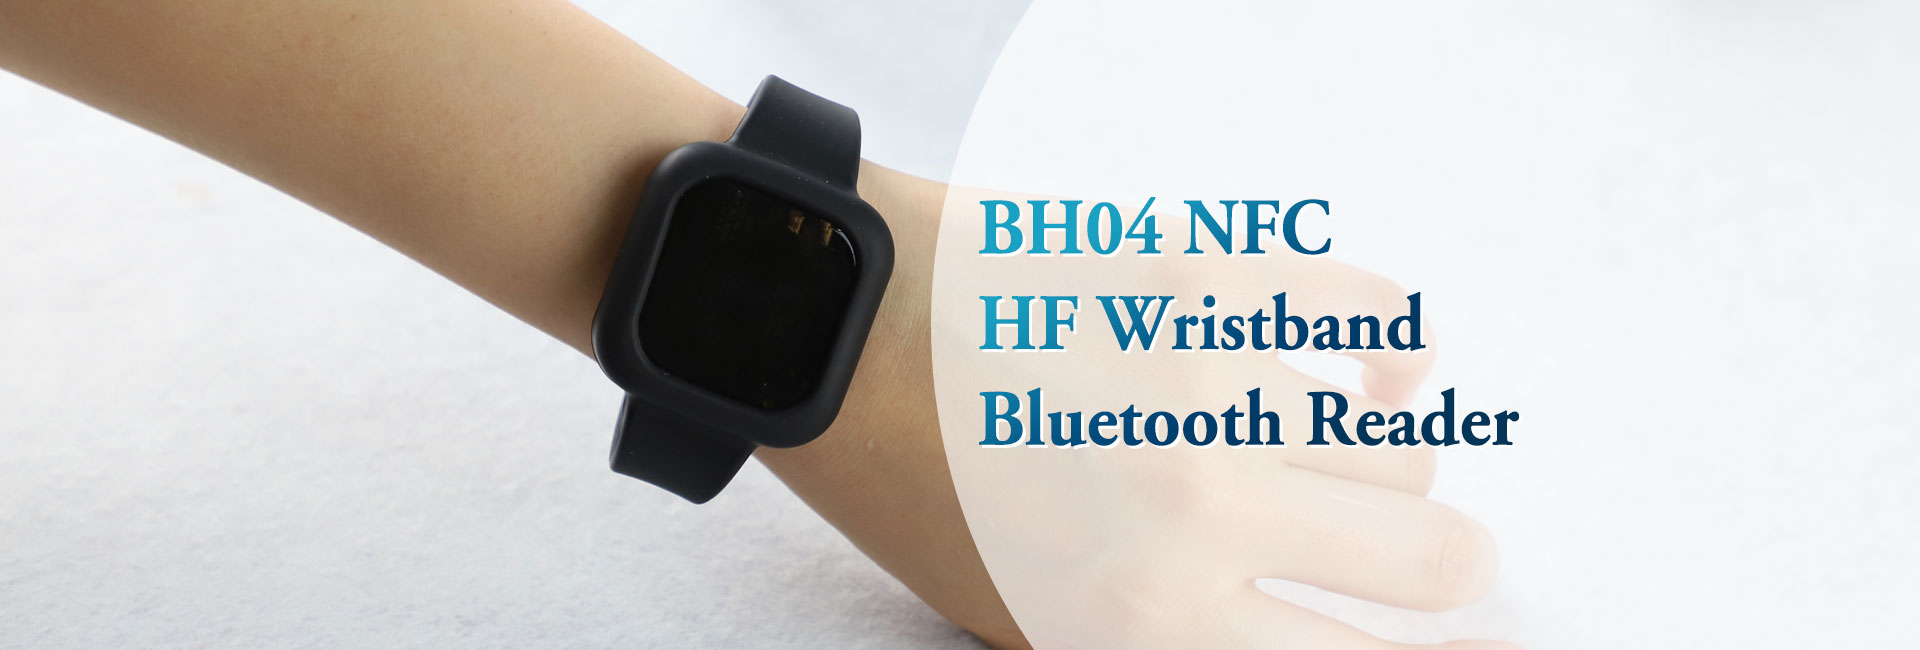 BH04 NFC高频或者说是istband Bluetooth Reader